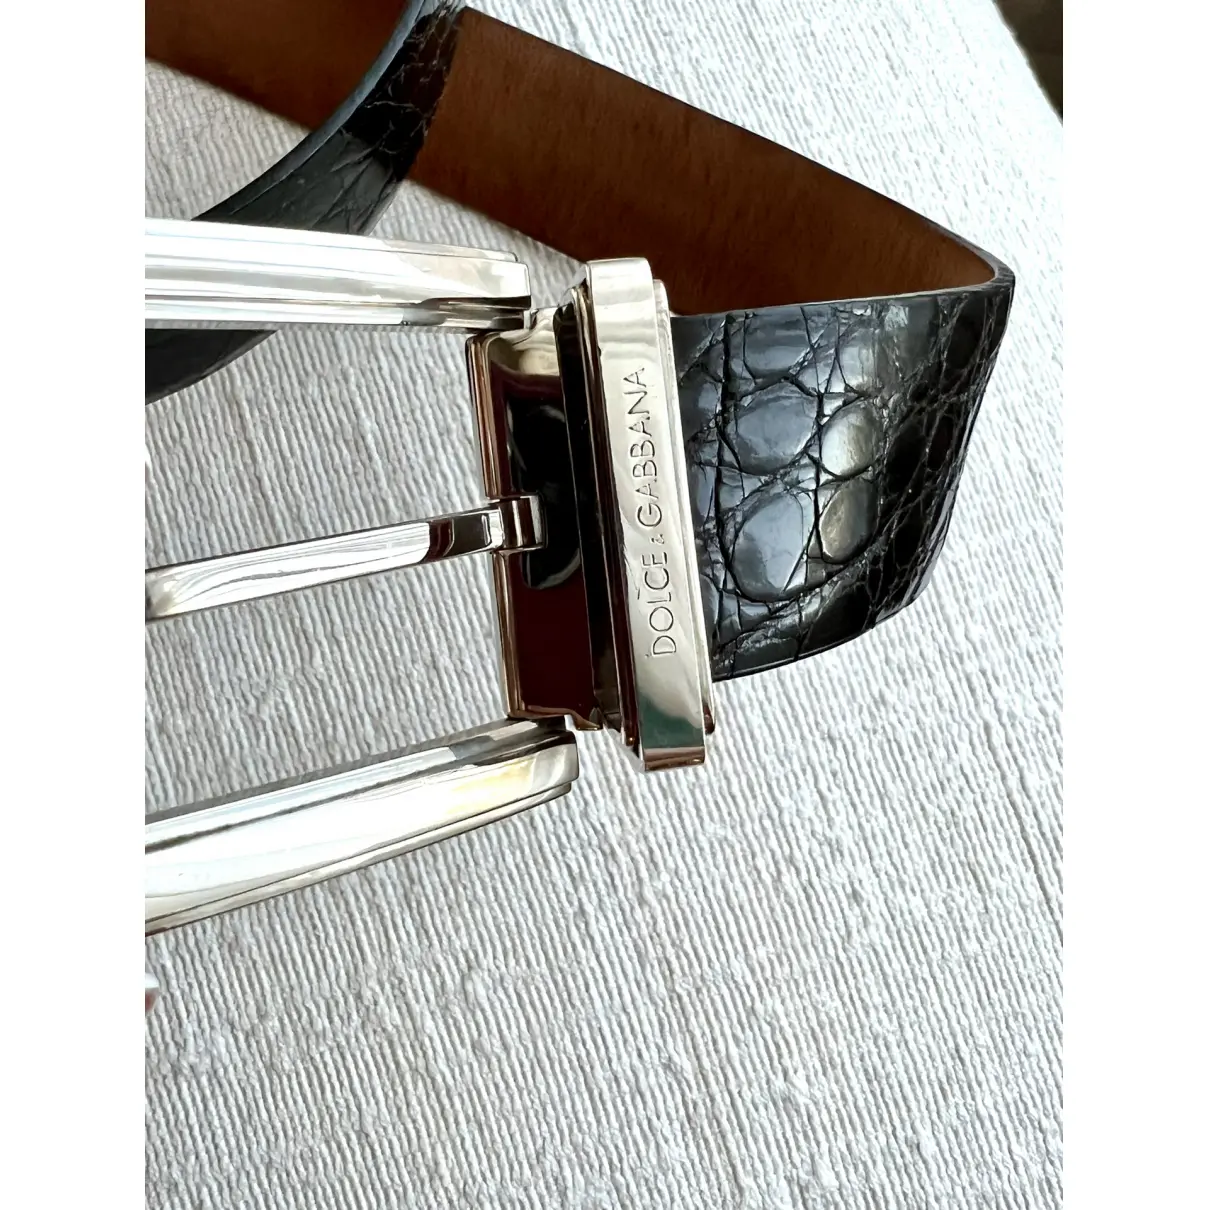 Buy Dolce & Gabbana Crocodile belt online